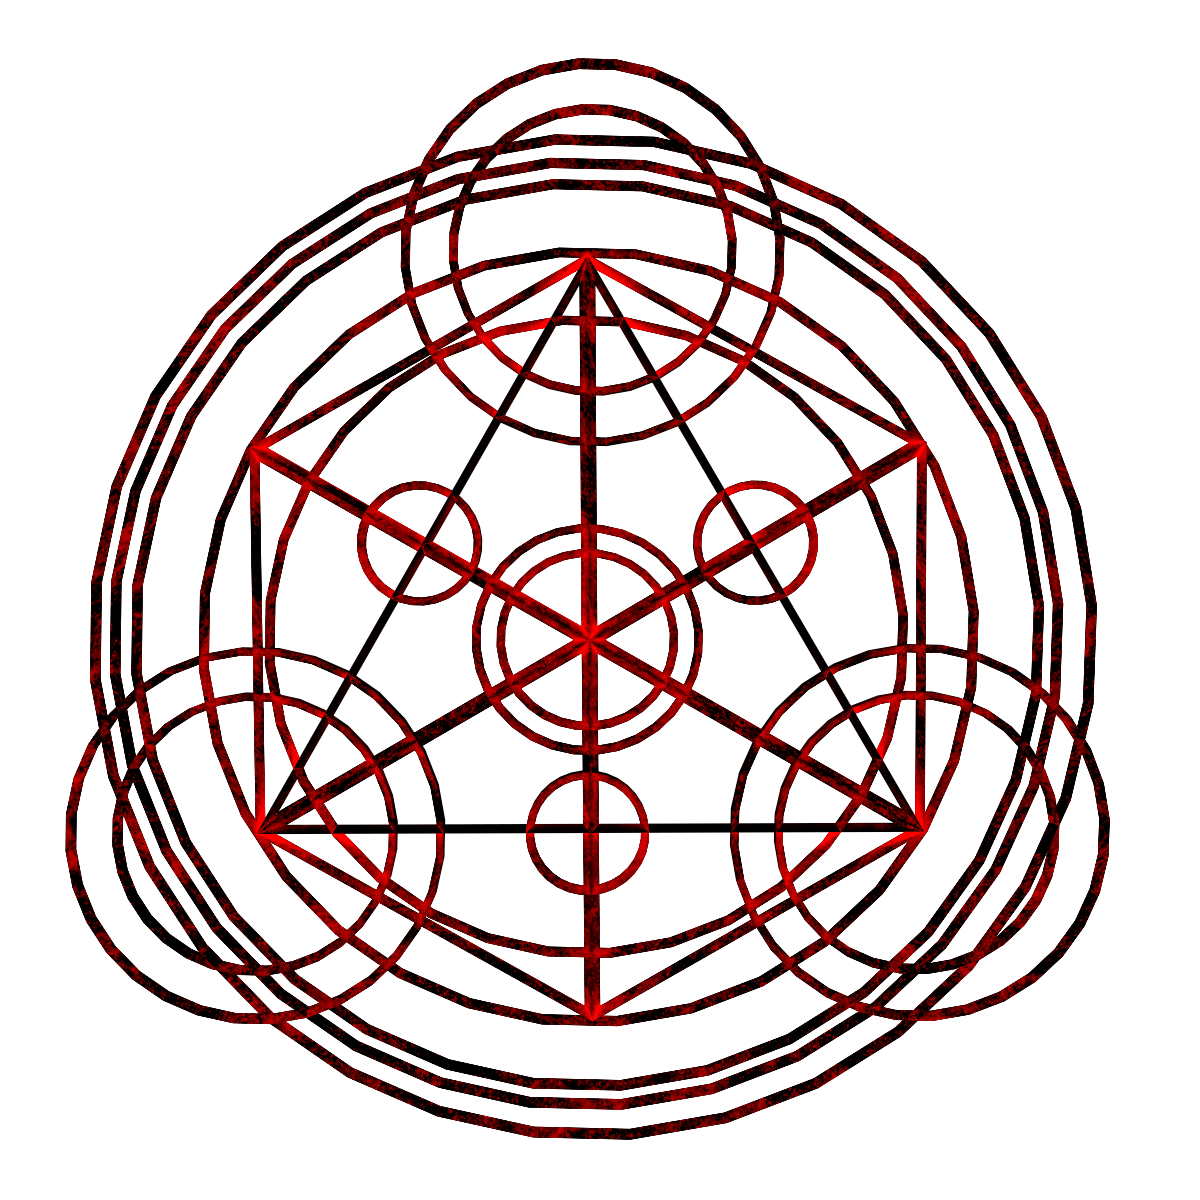 3D model of a transmutation circle.